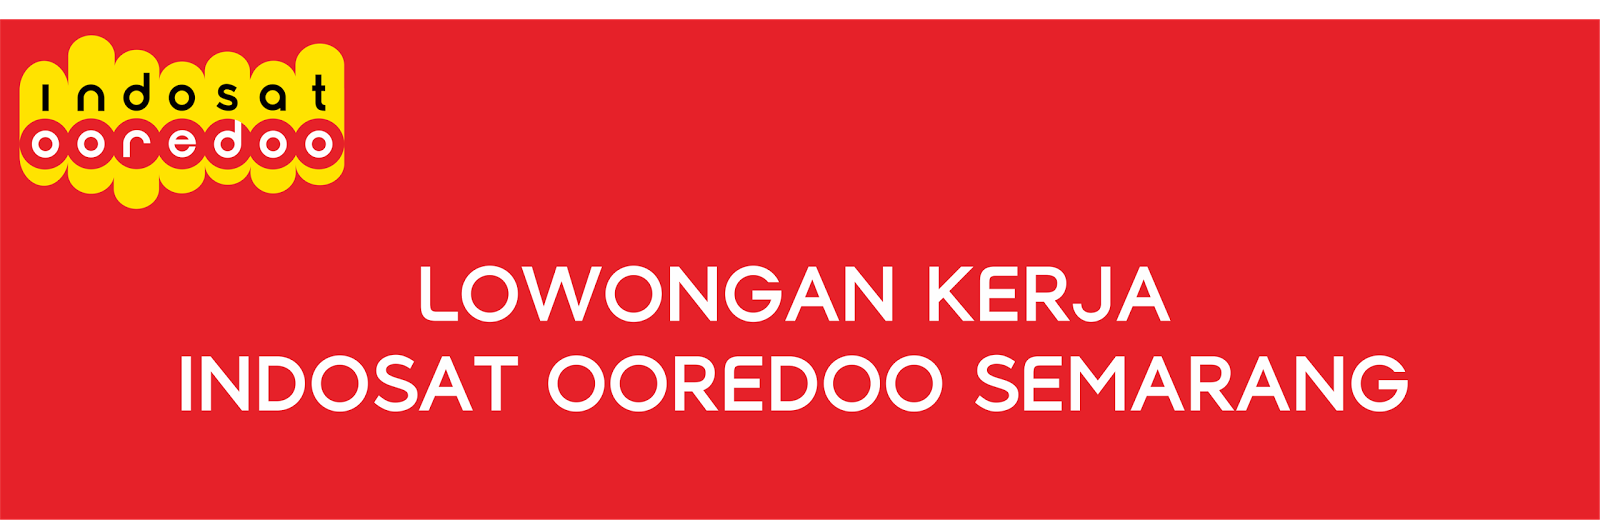 Lowongan Kerja di Vads (Indosat Ooredoo) - Semarang 